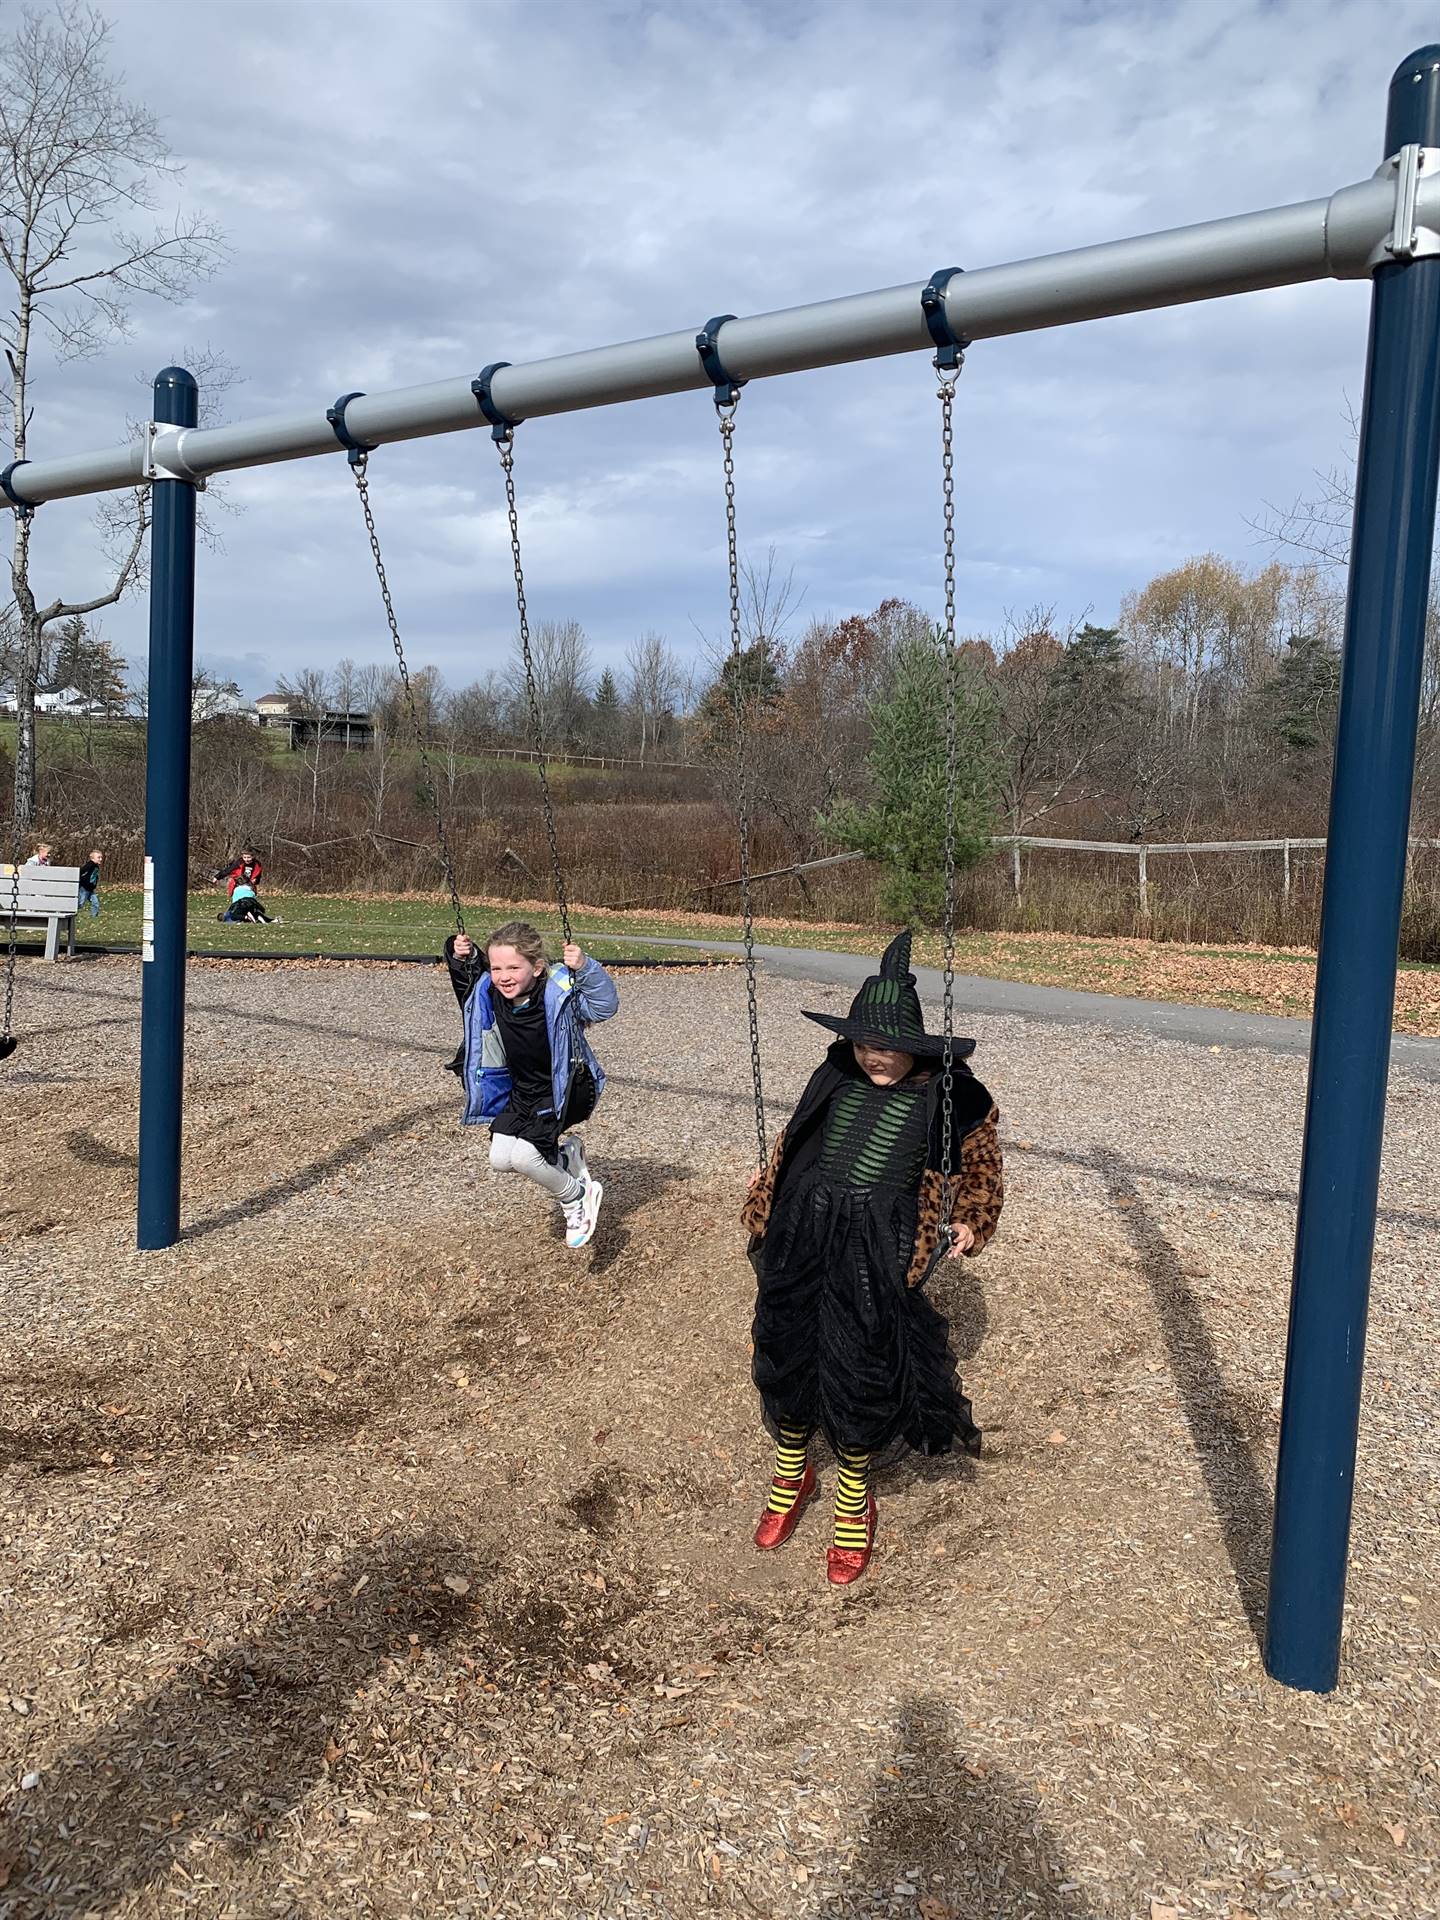 2 witches on playground swinging. 